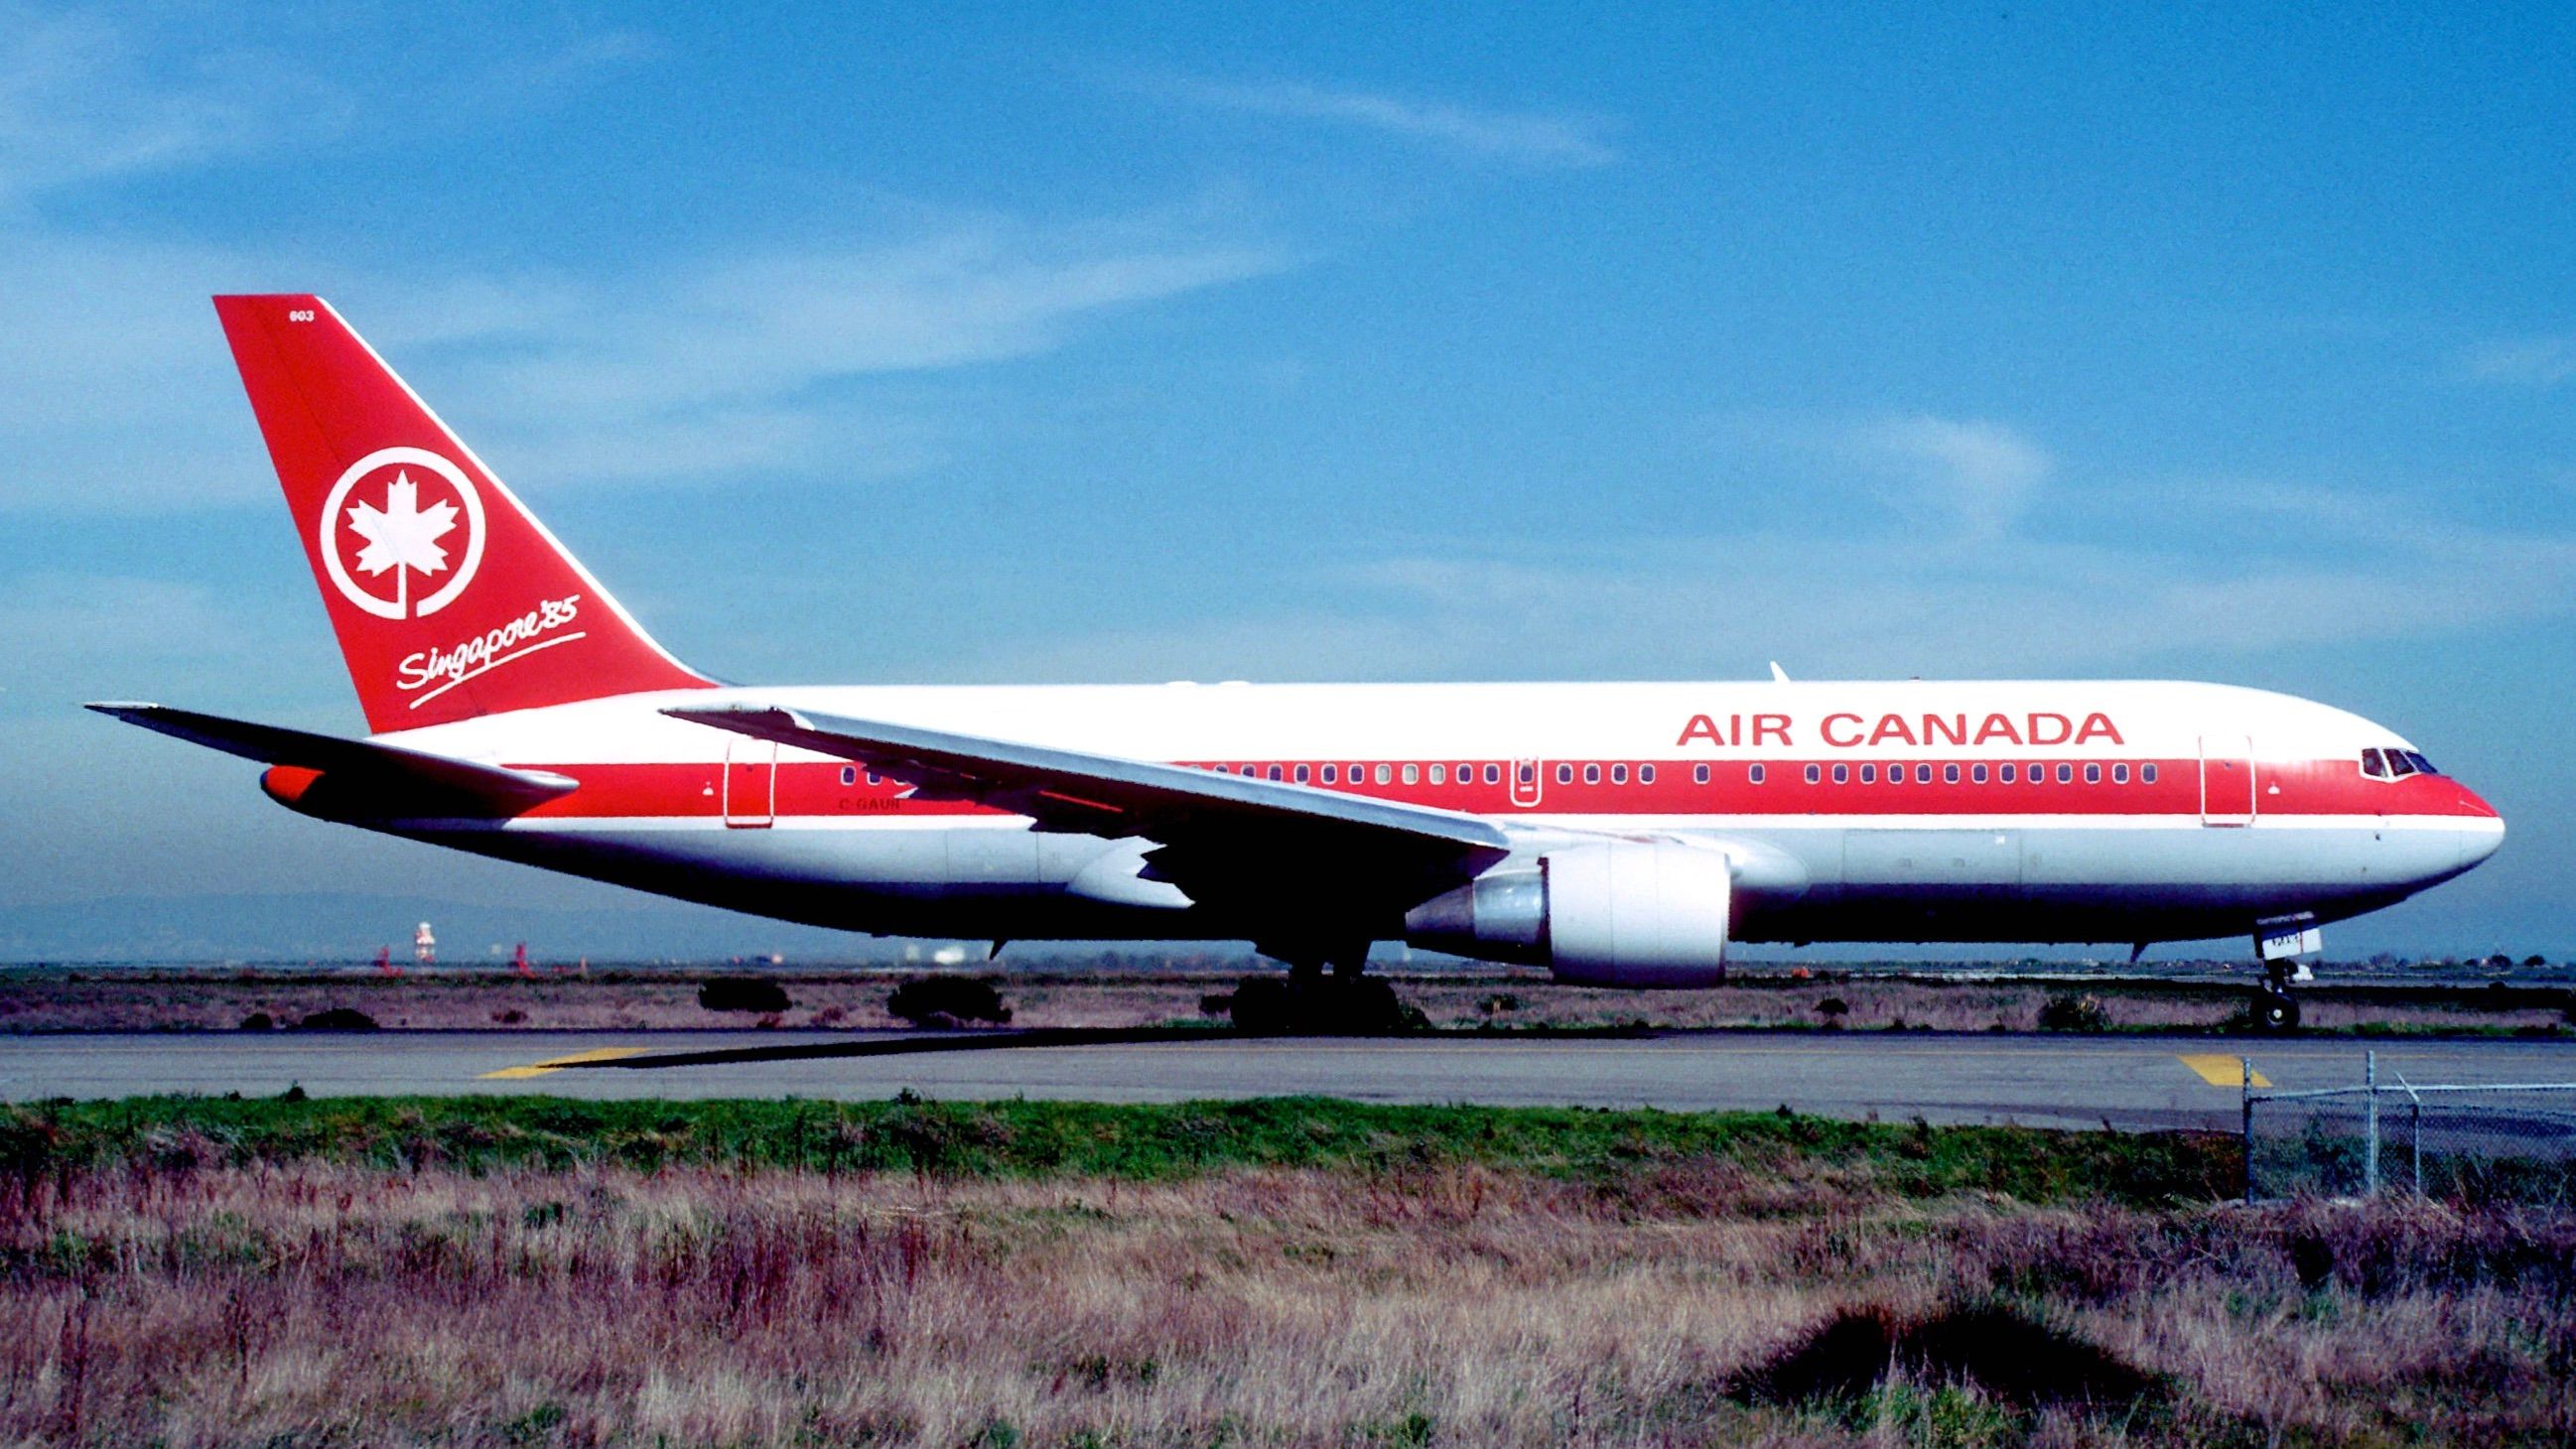 Air Canada Boeing 767-233; C-GAUN@SFO;17.02.1985 on the ground